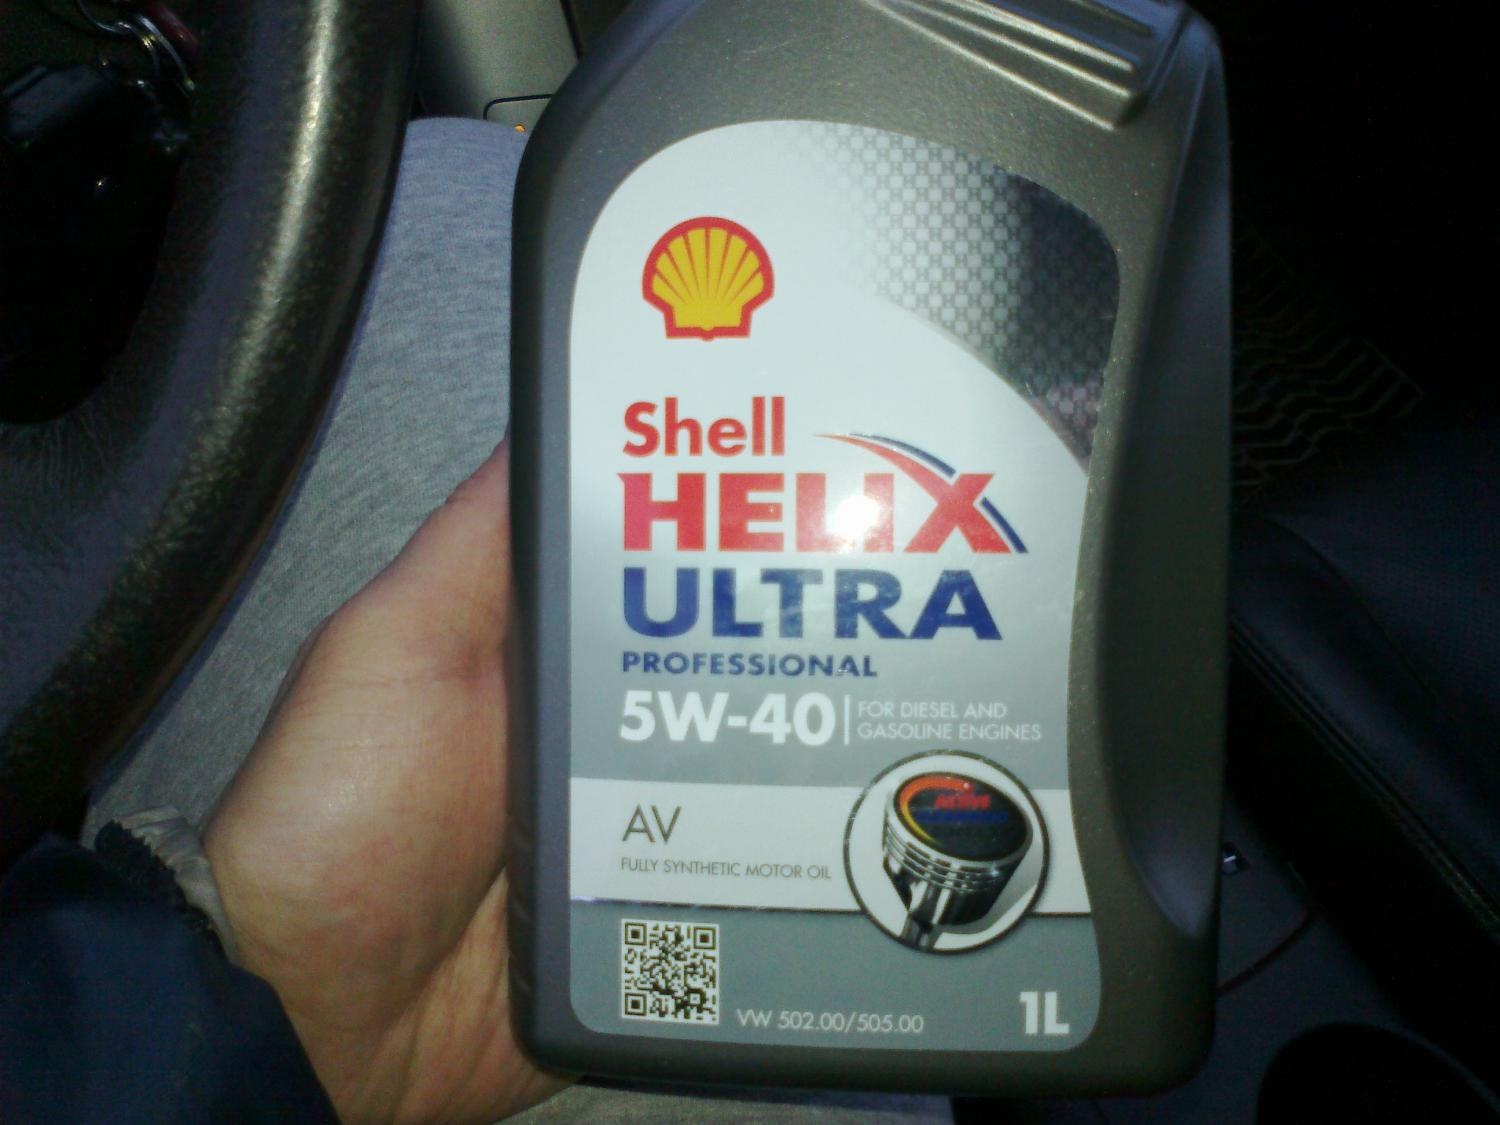 Shell helix av. Шелл Хеликс ультра профессионал 5w40. Shell av 5w40. Shell Helix Ultra professional av 5w-40. Shell Helix 5w30 Geely.